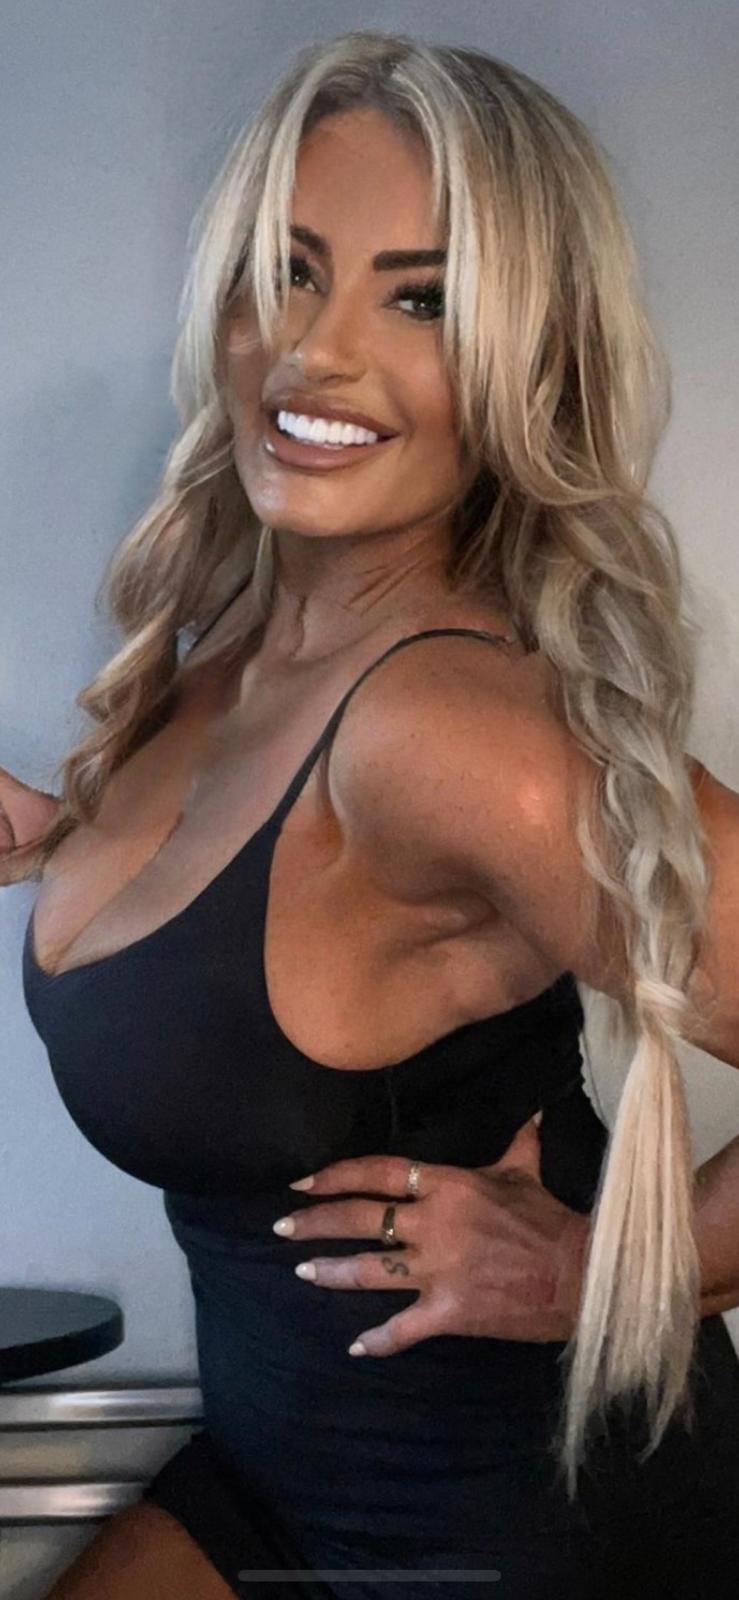 barbara degregorio share blonde with perky tits photos